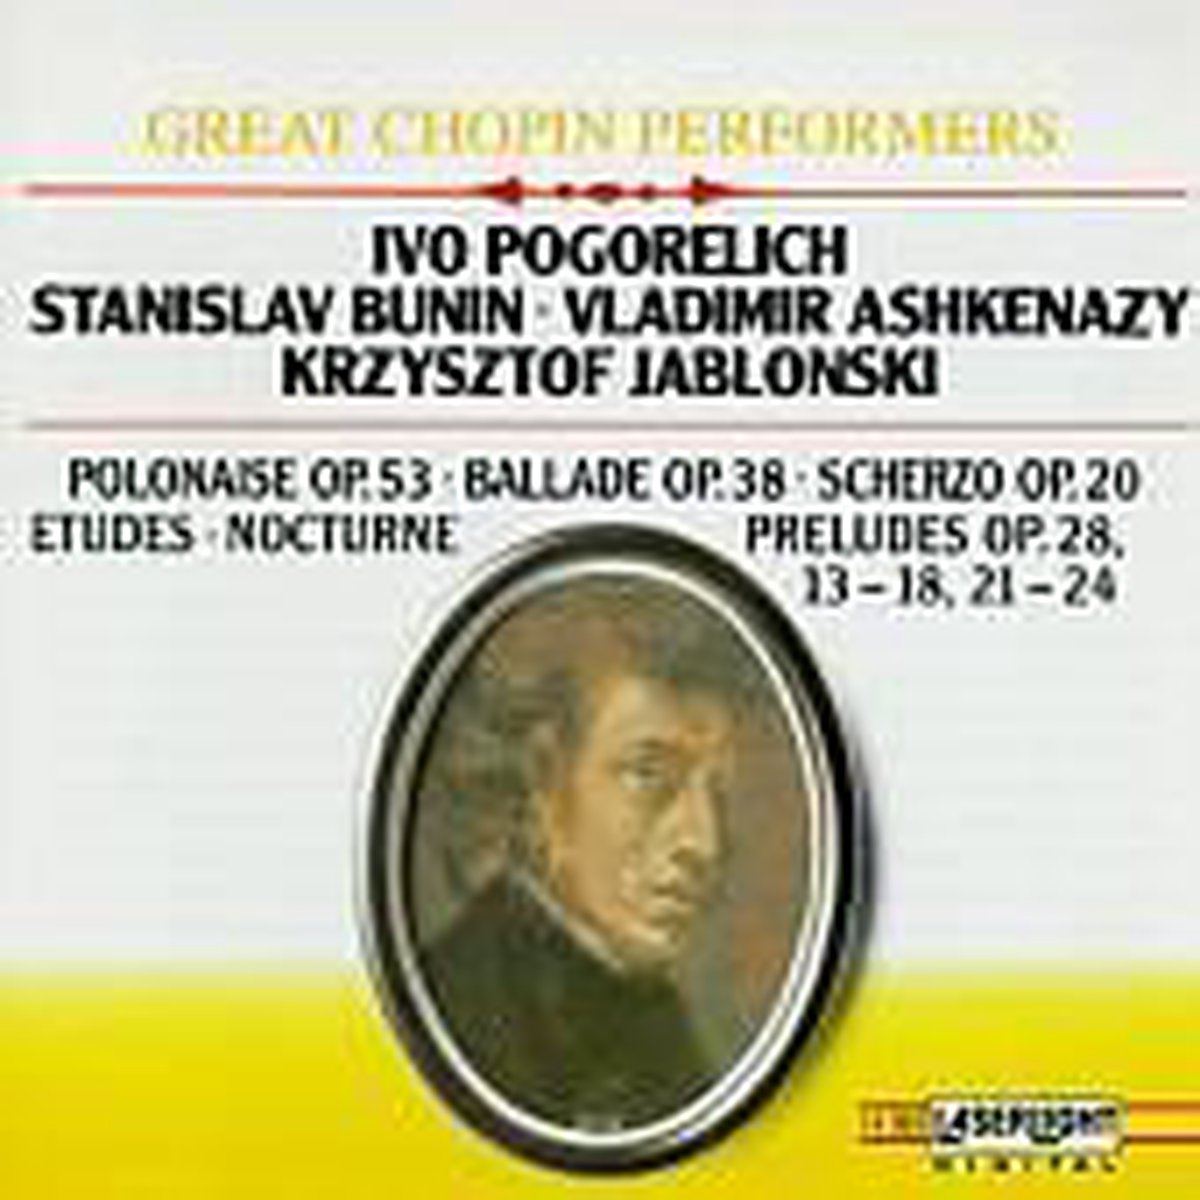 Chopin: Polonaise Op. 53; Ballade Op. 38; Scherzo Op. 20; Etudes; Nocturne; Preludes Op. 28 Nos. 13-18, 21-24 - Vladimir Ashkenazy / Stanislav Bunin / Krzysztof Jablonski